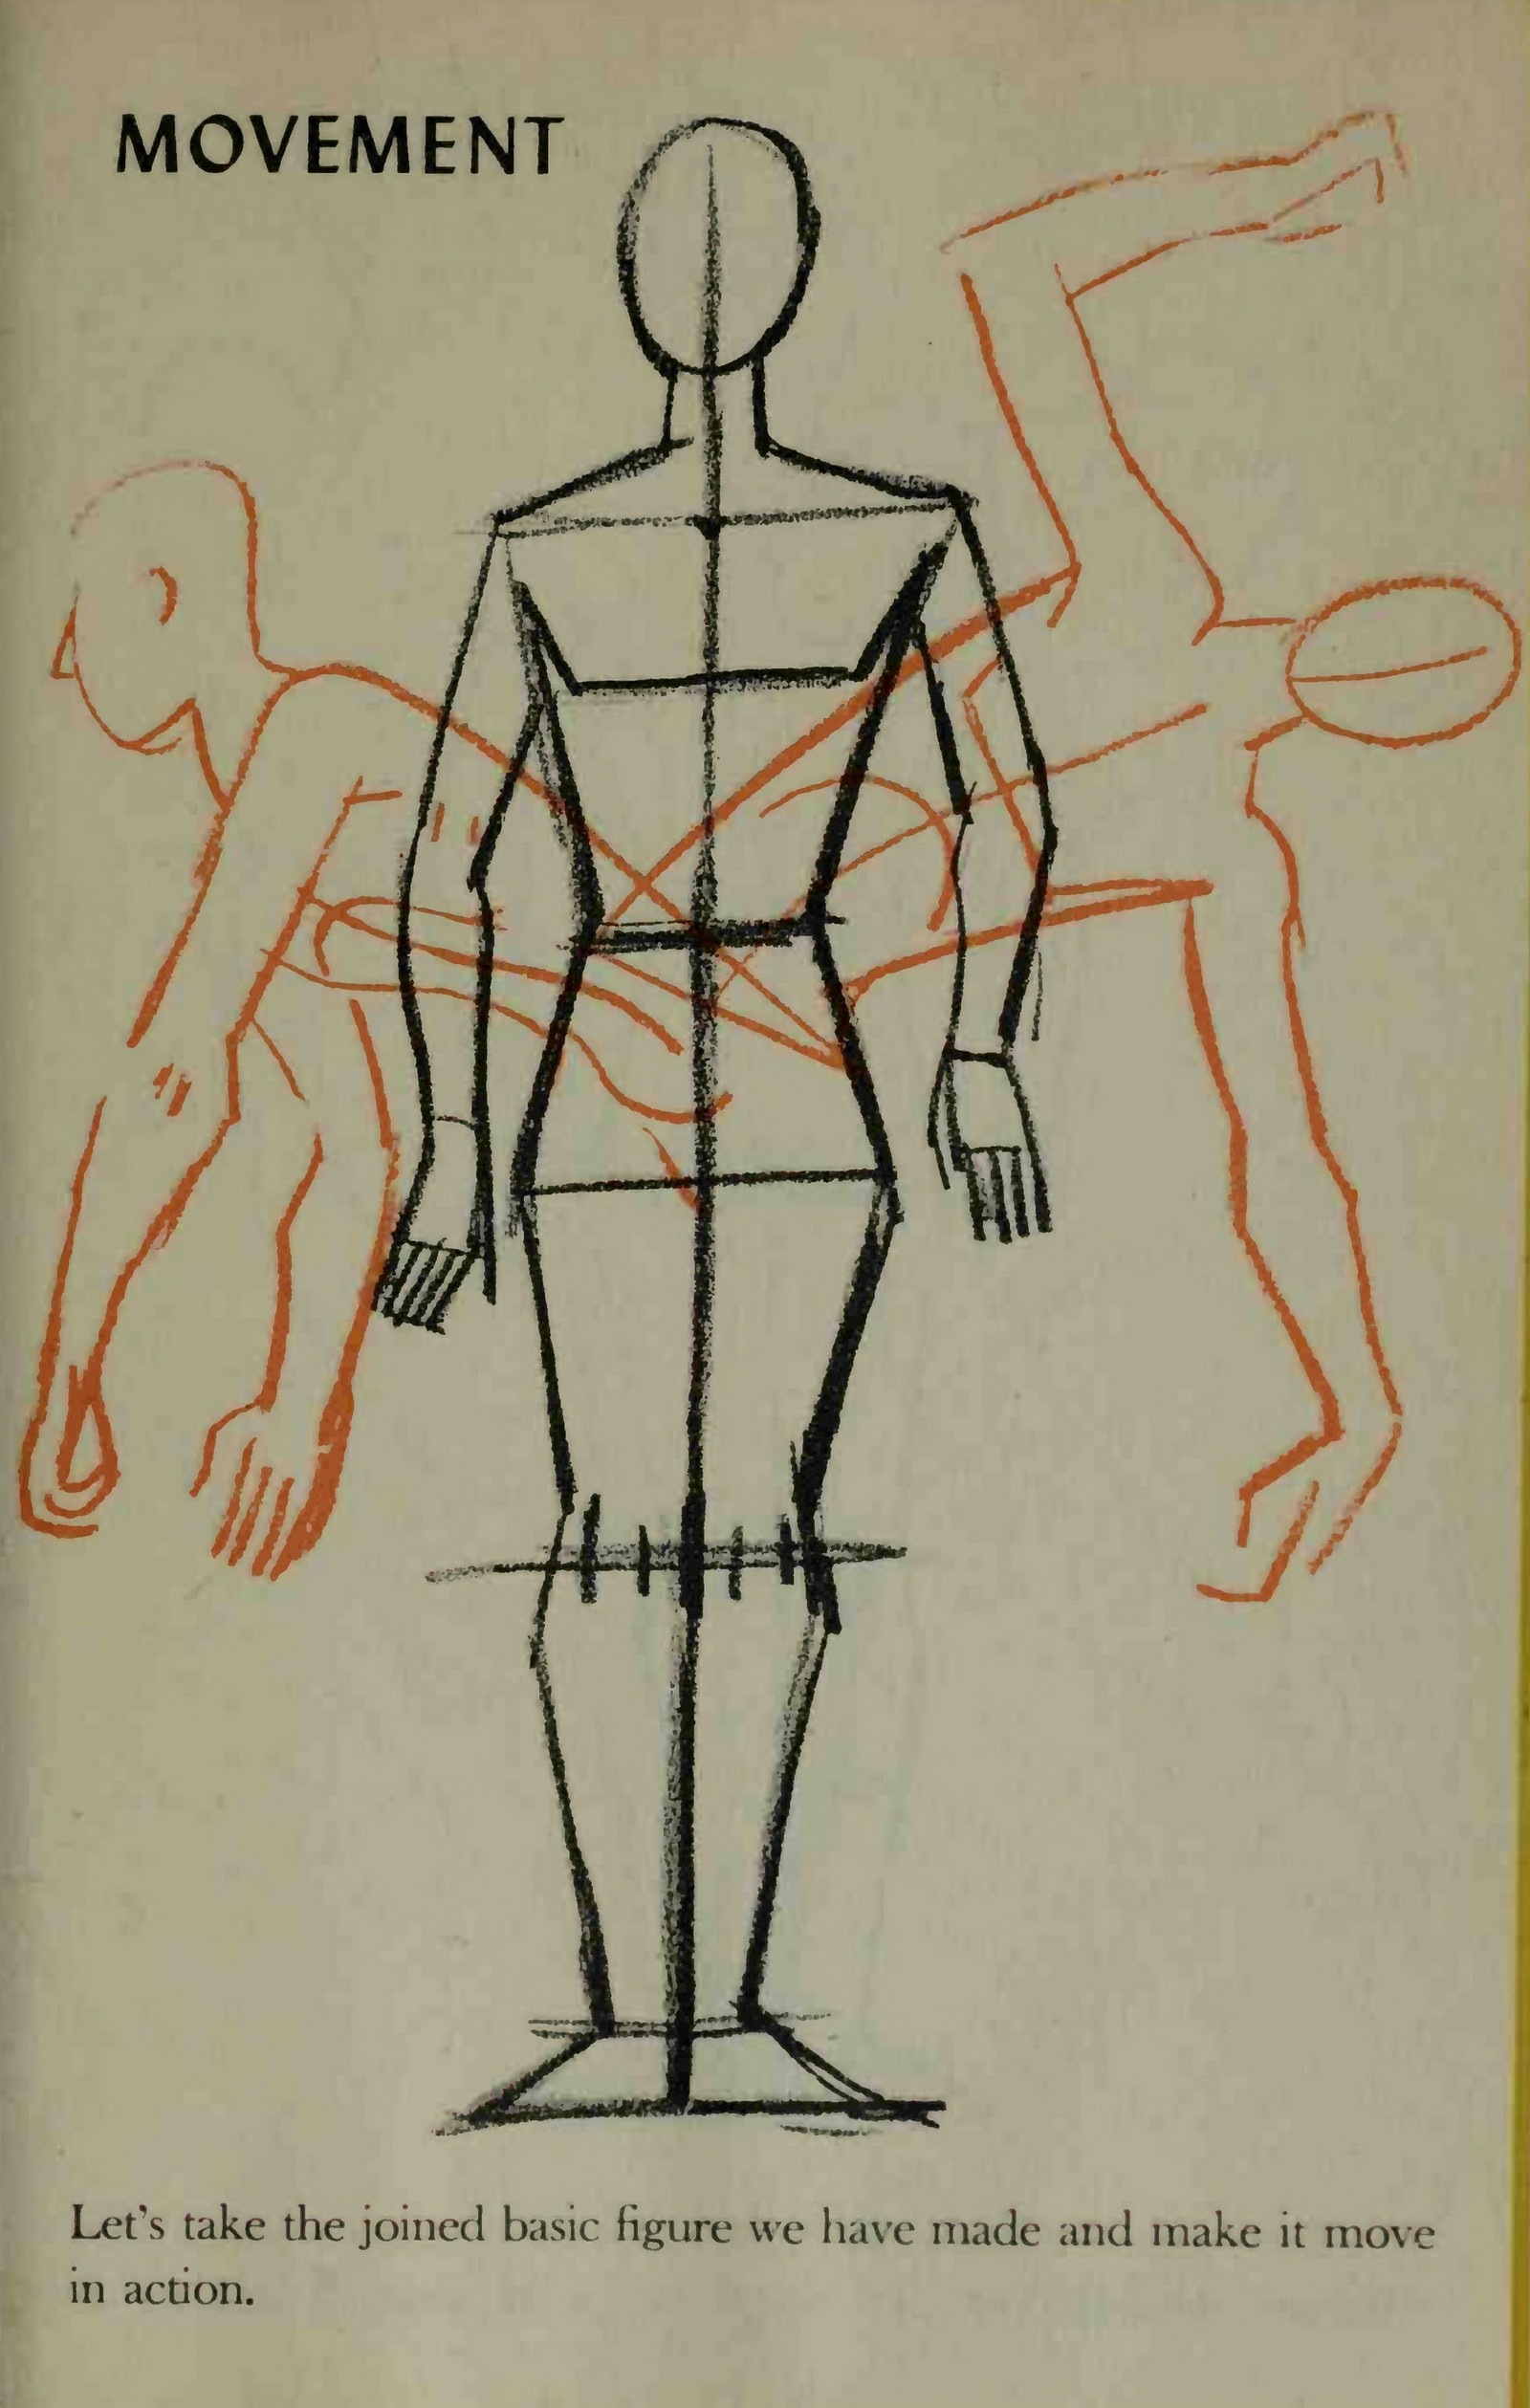 Drawing Self-Taught / Arthur Zaidenberg. — Cardinal edition. — New York : Pocket Books, Inc., 1954